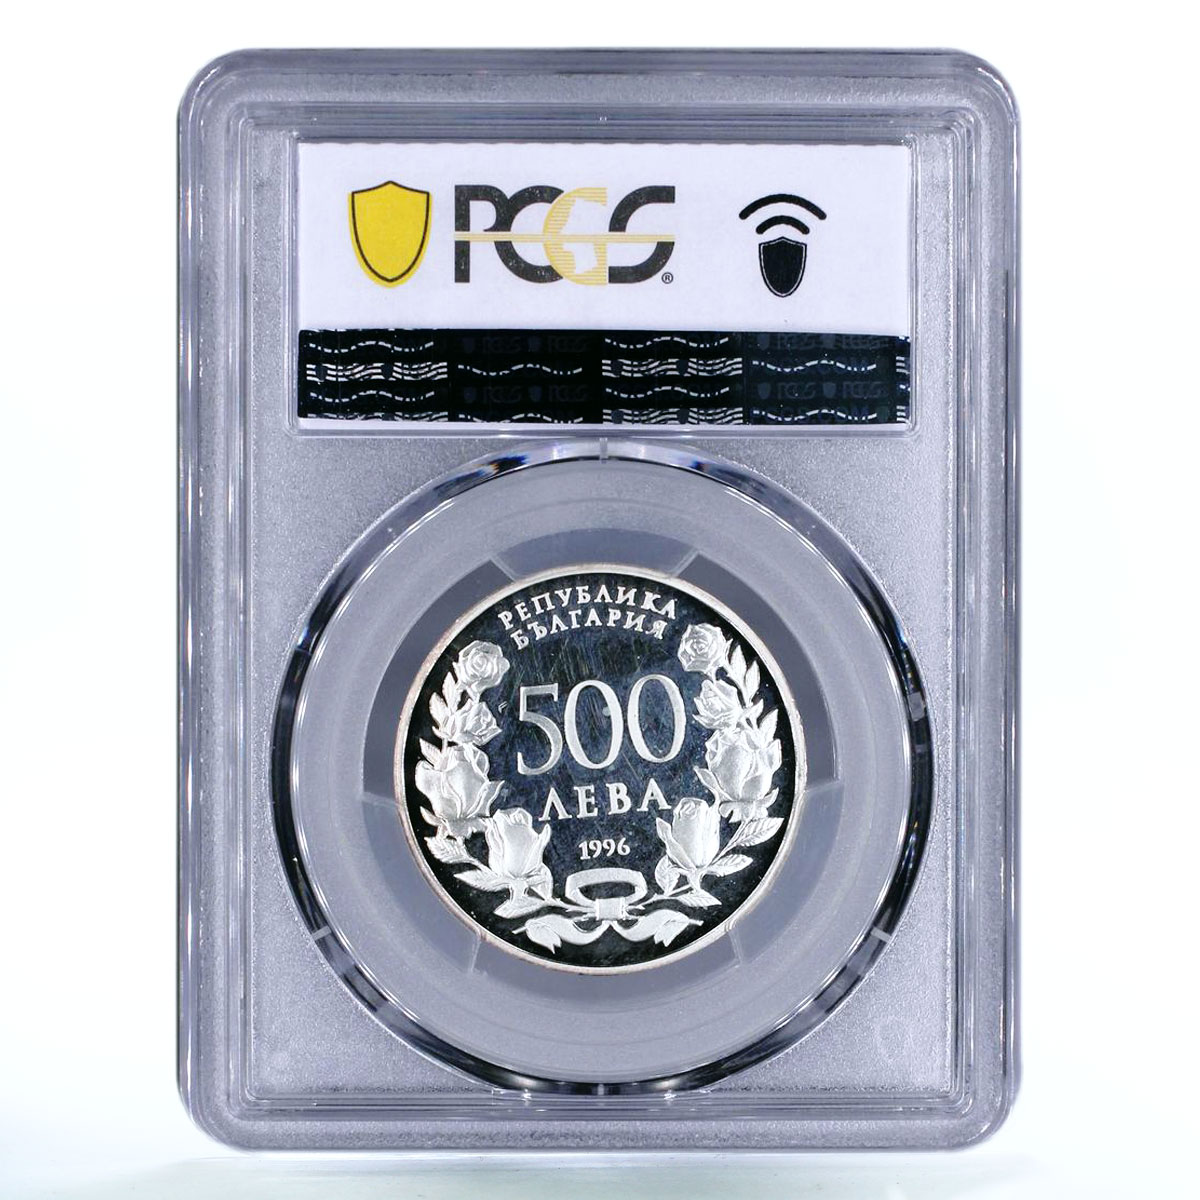 Bulgaria 500 leva Football Cup in France Mule KM 219 PR63 PCGS silver coin 1996